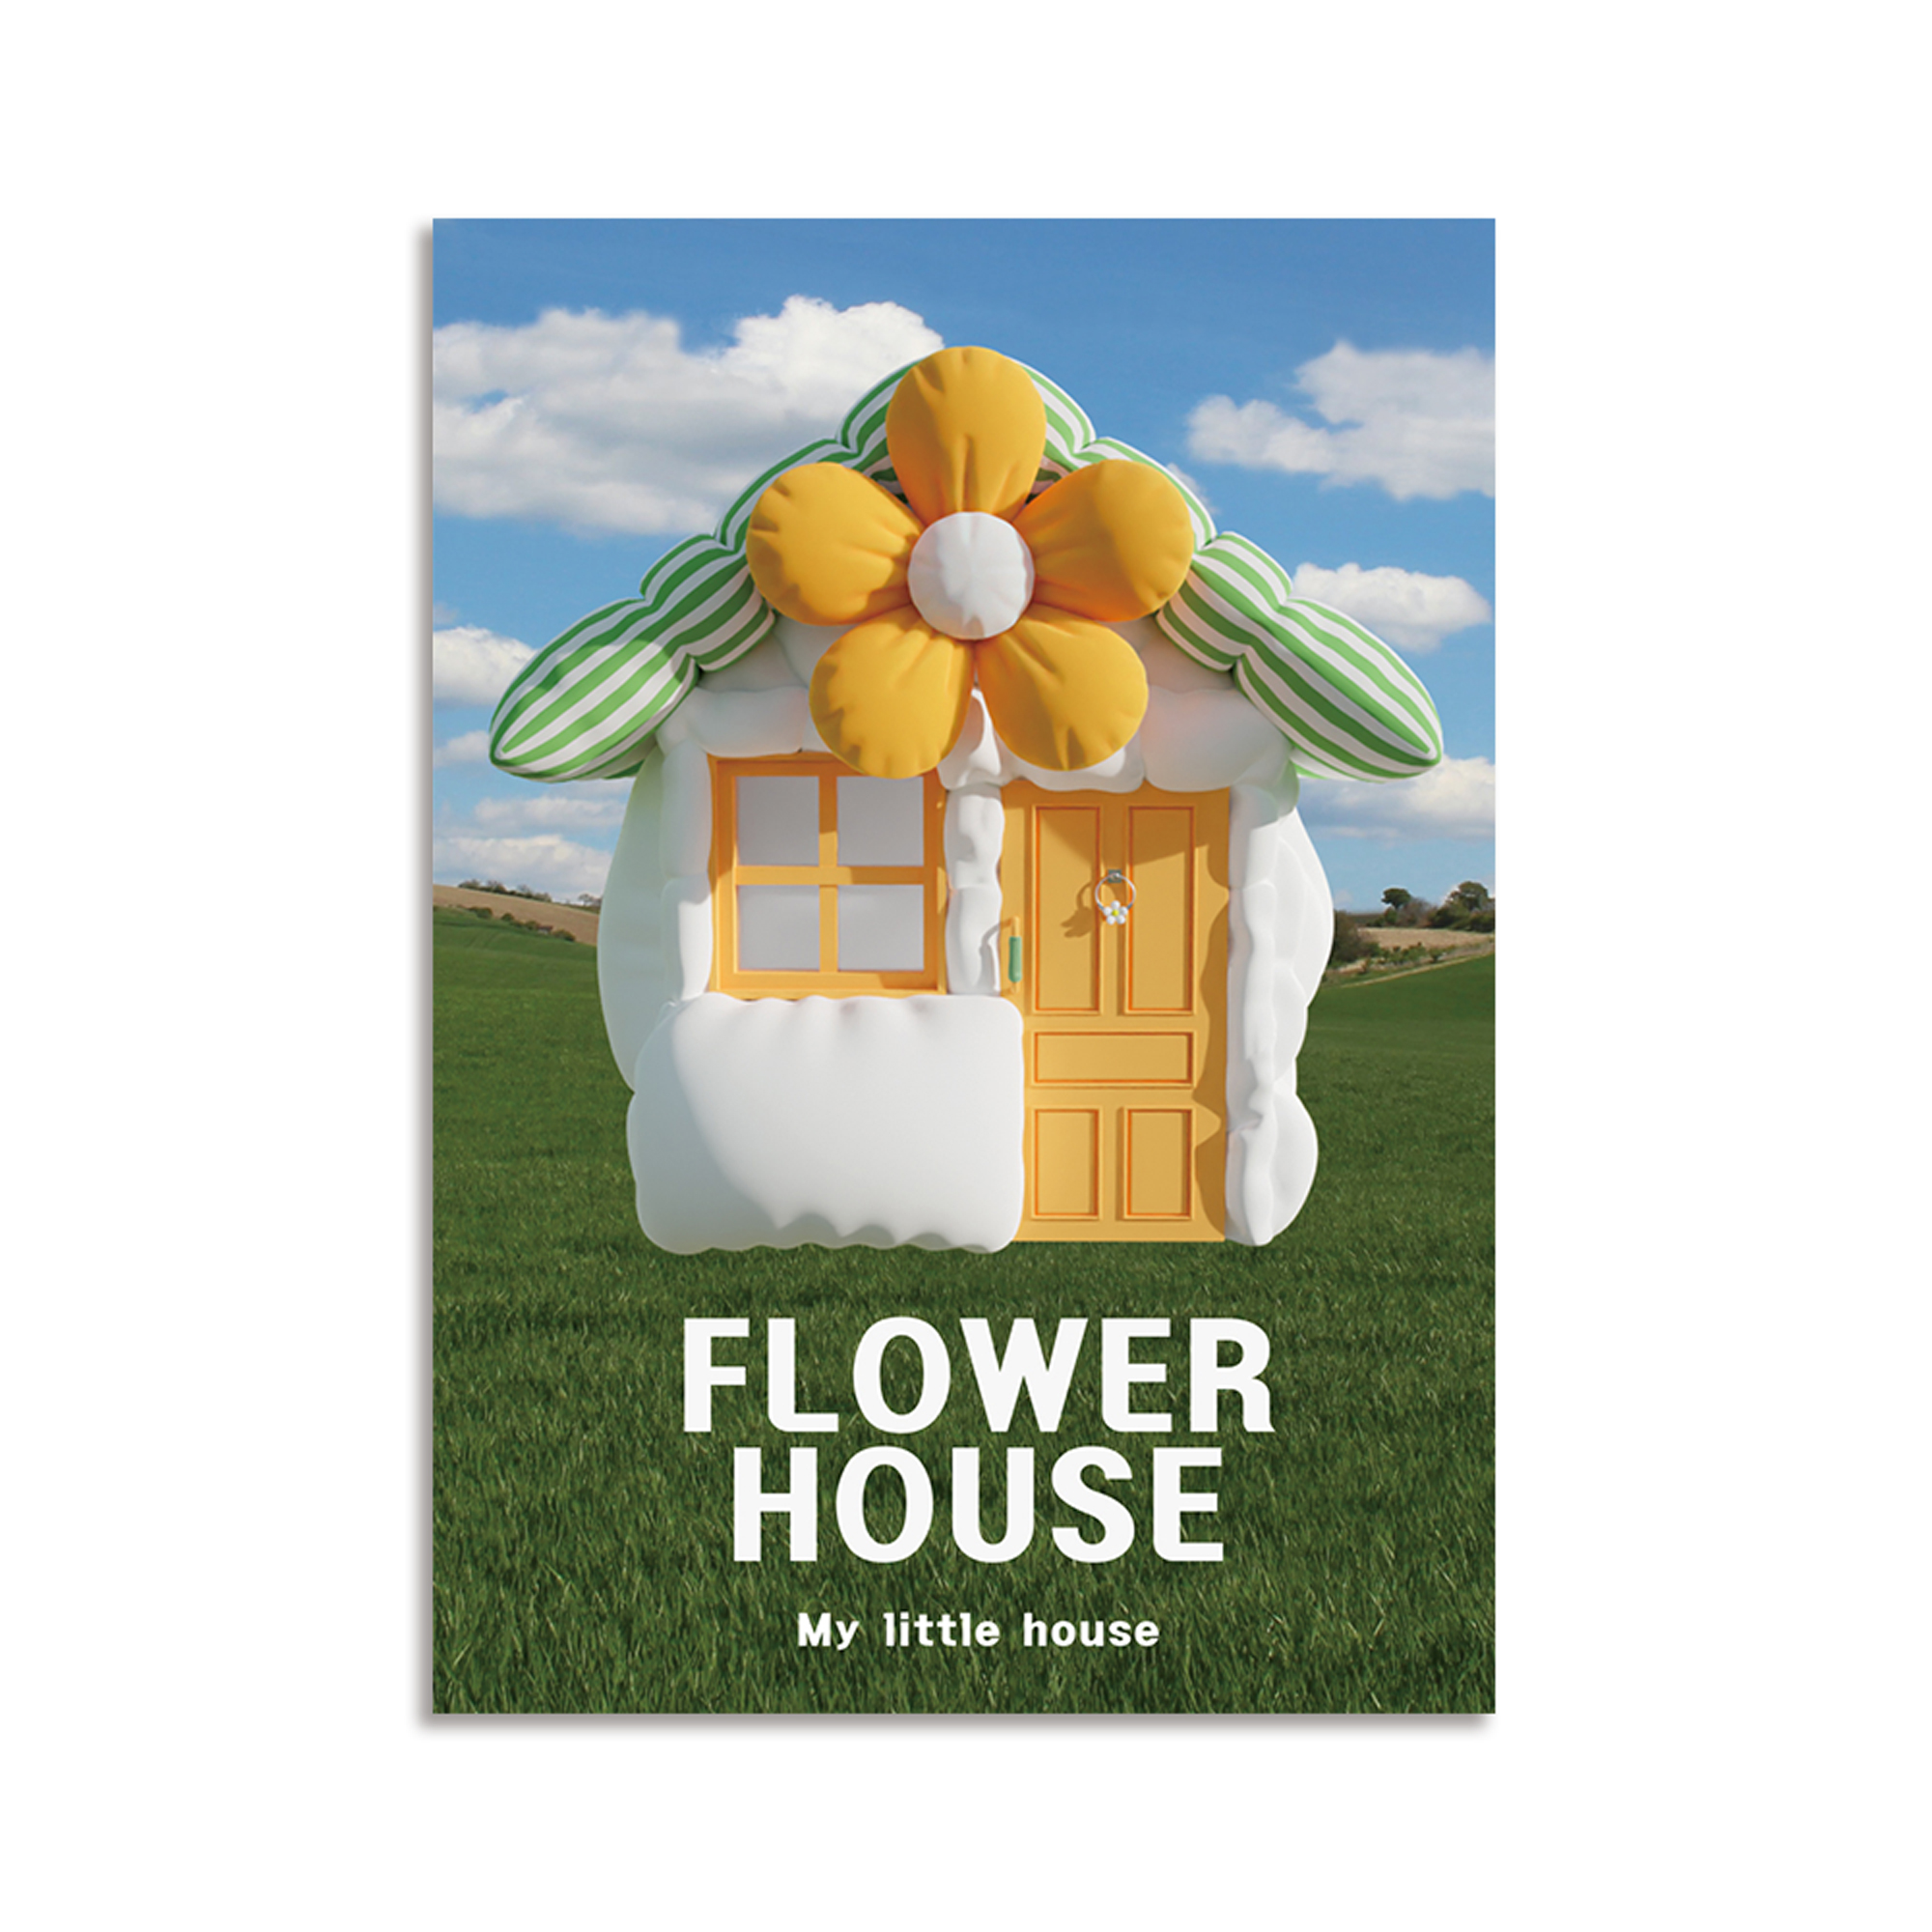 FLOWER HOUSE